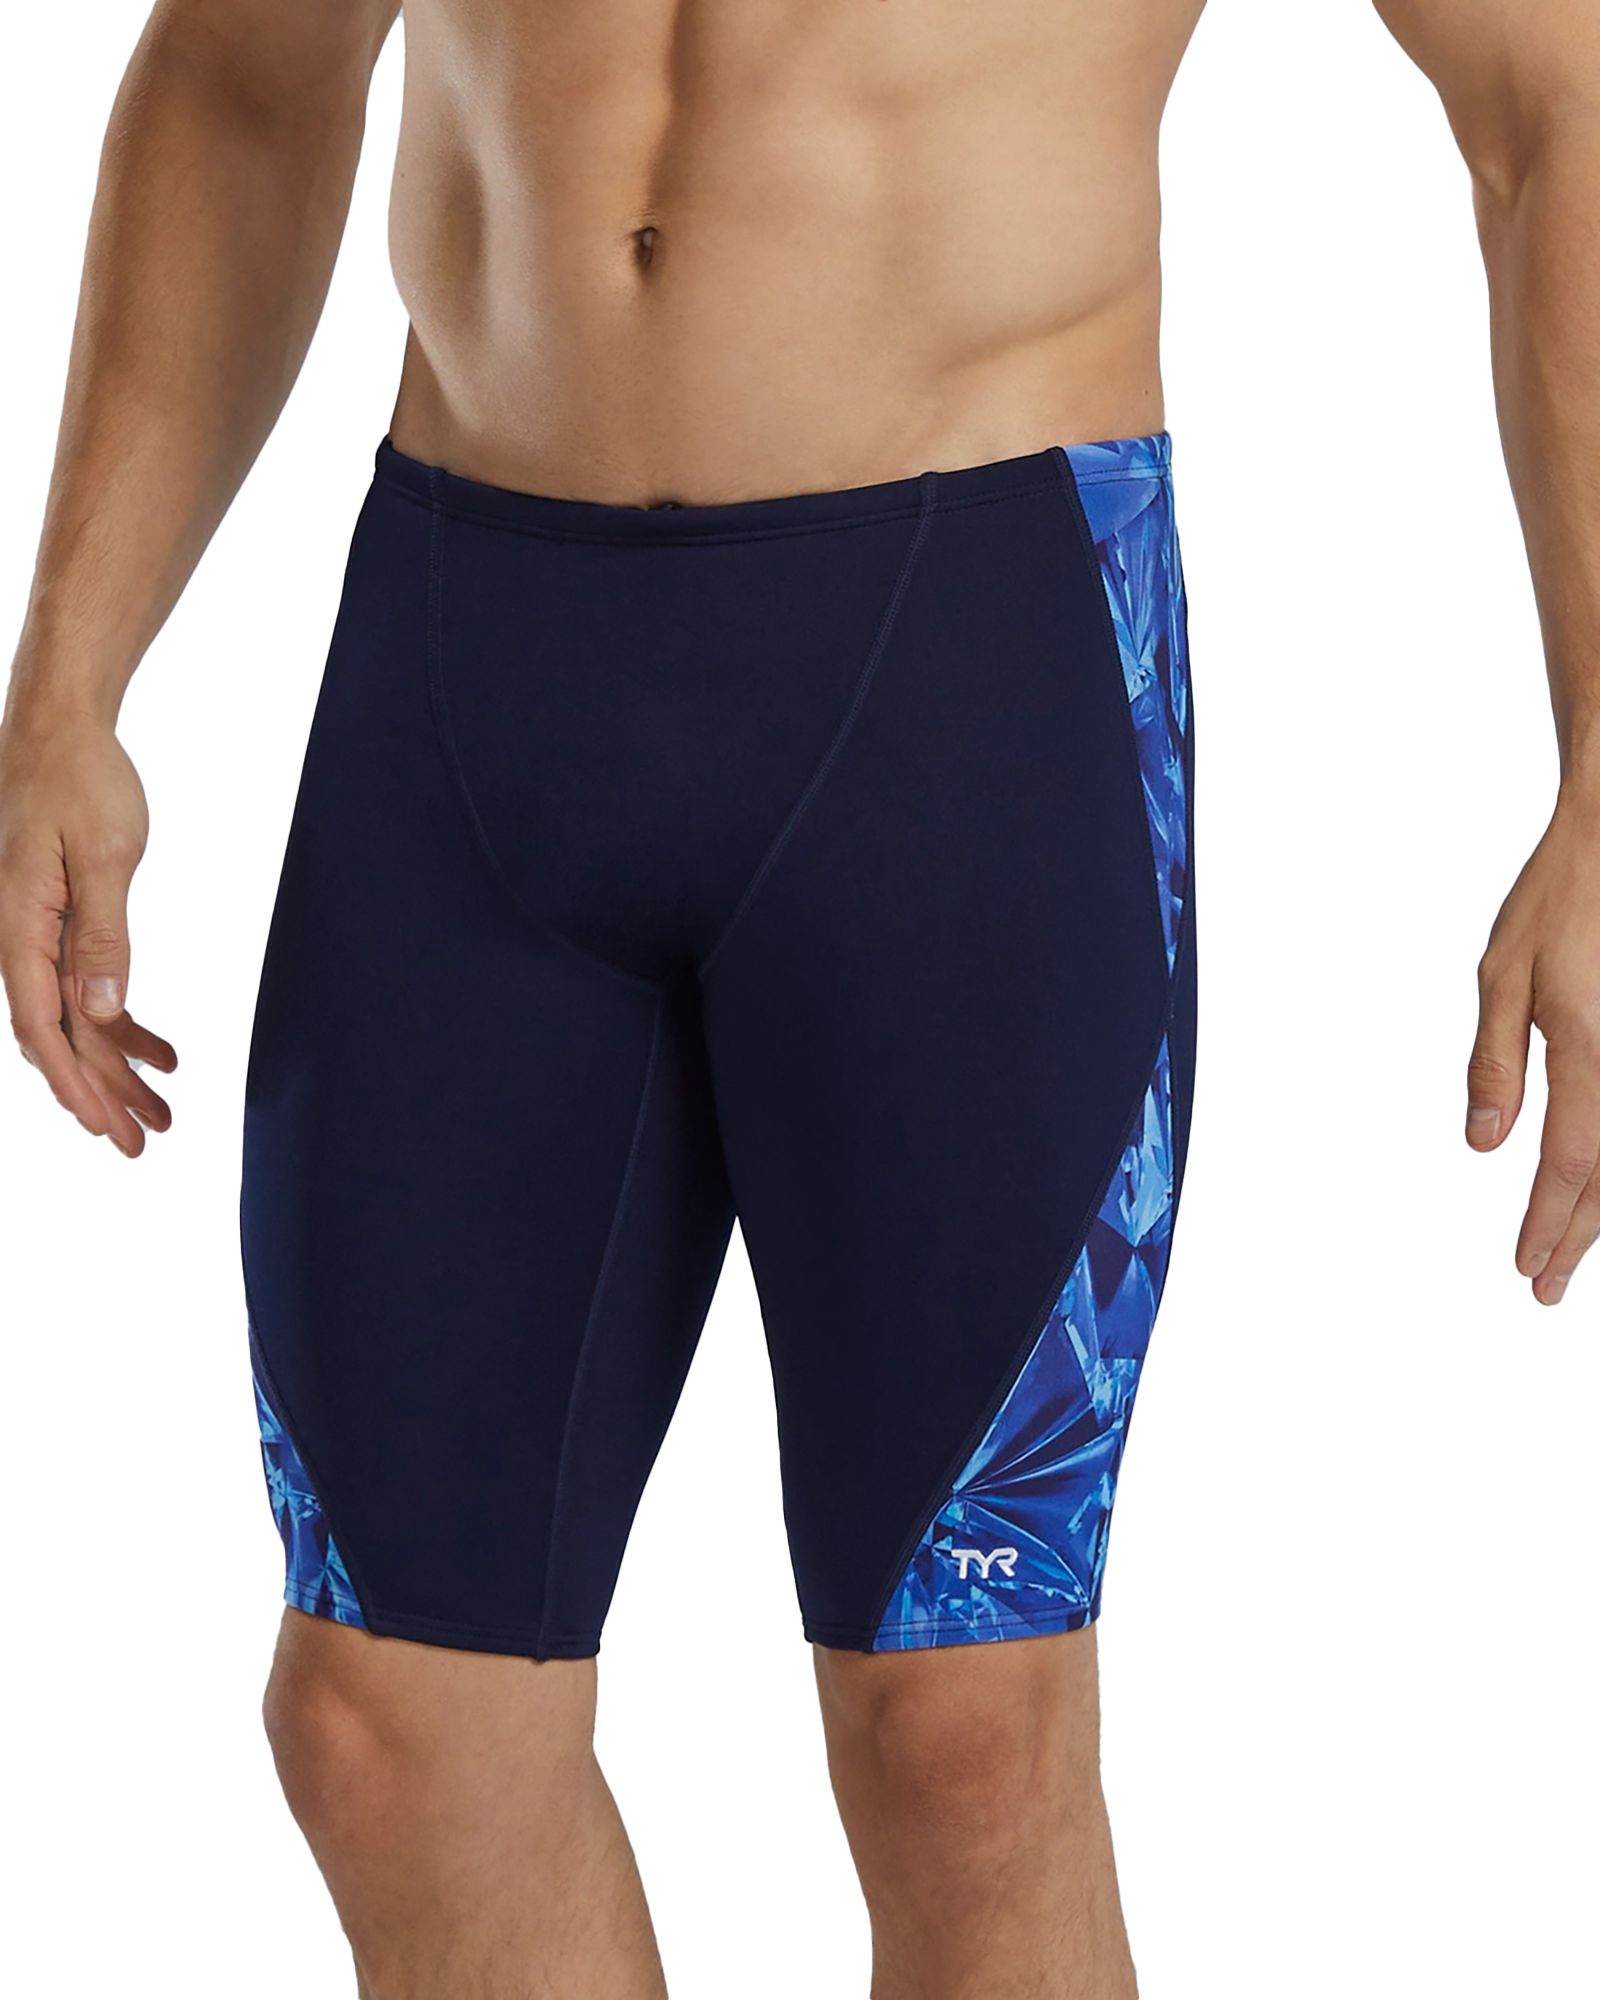 Photos - Swimwear TYR Men's Durafast Eliste Crystalized Jammer Swimsuit, Size 32, Blue 23TYR 